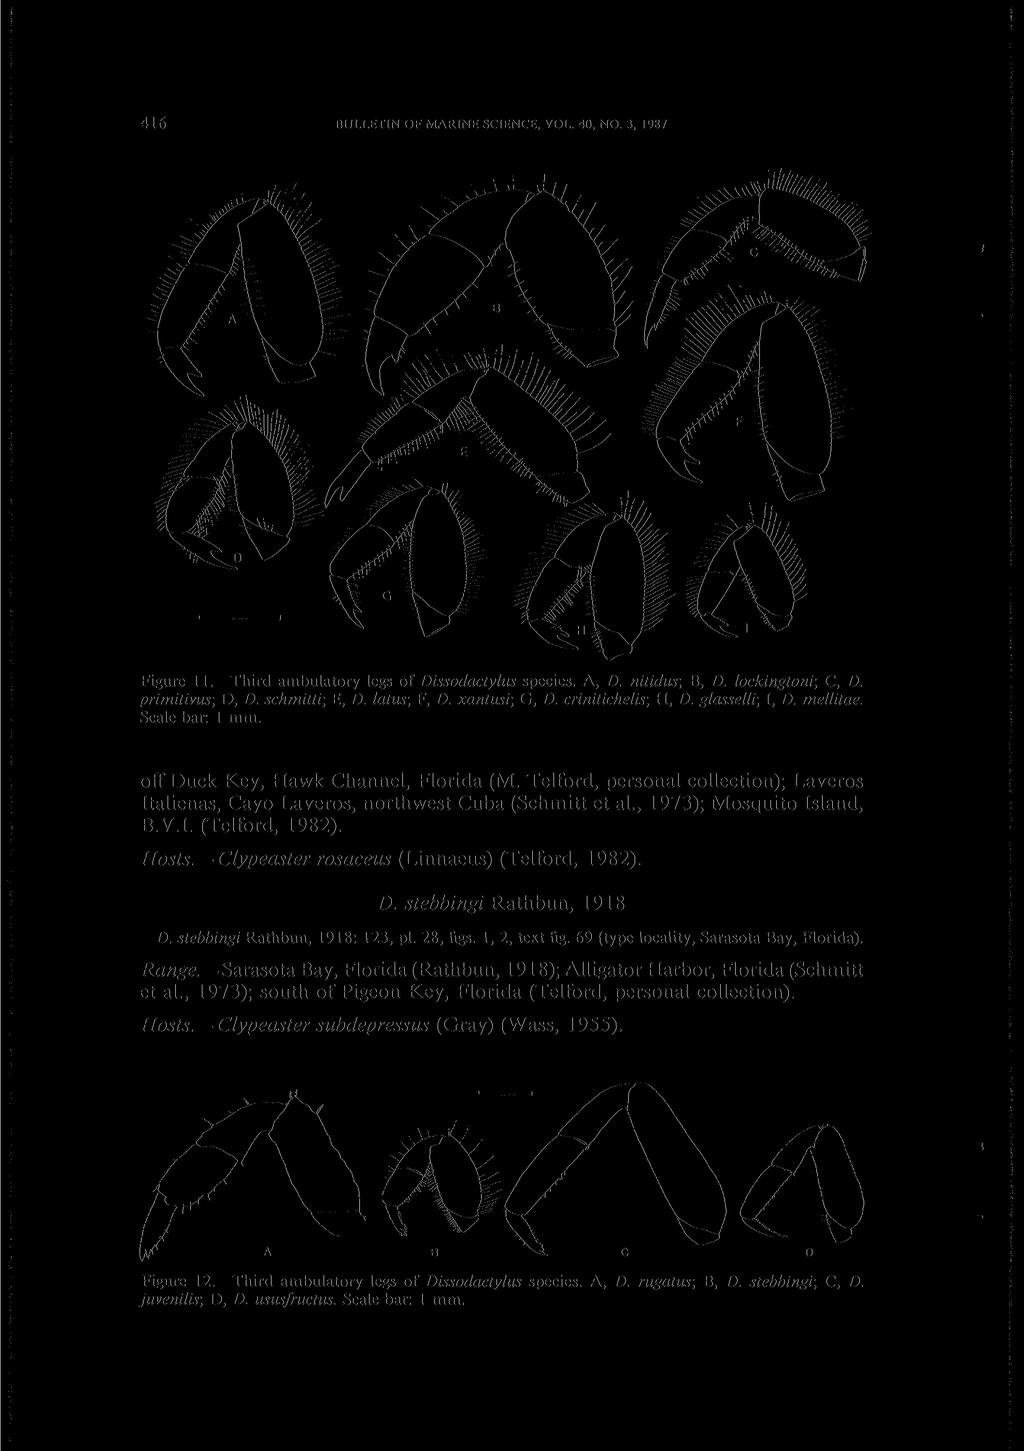 416 BULLETIN OF MARINE SCIENCE, VOL. 40, NO. 3, 1987 Figure 11. Third ambulatory legs of Dissodactylus species. A, D. nitidus; B, D. lockingtoni; C, D. primitivus; D, D. schmitti; E, D. latus; F, D.